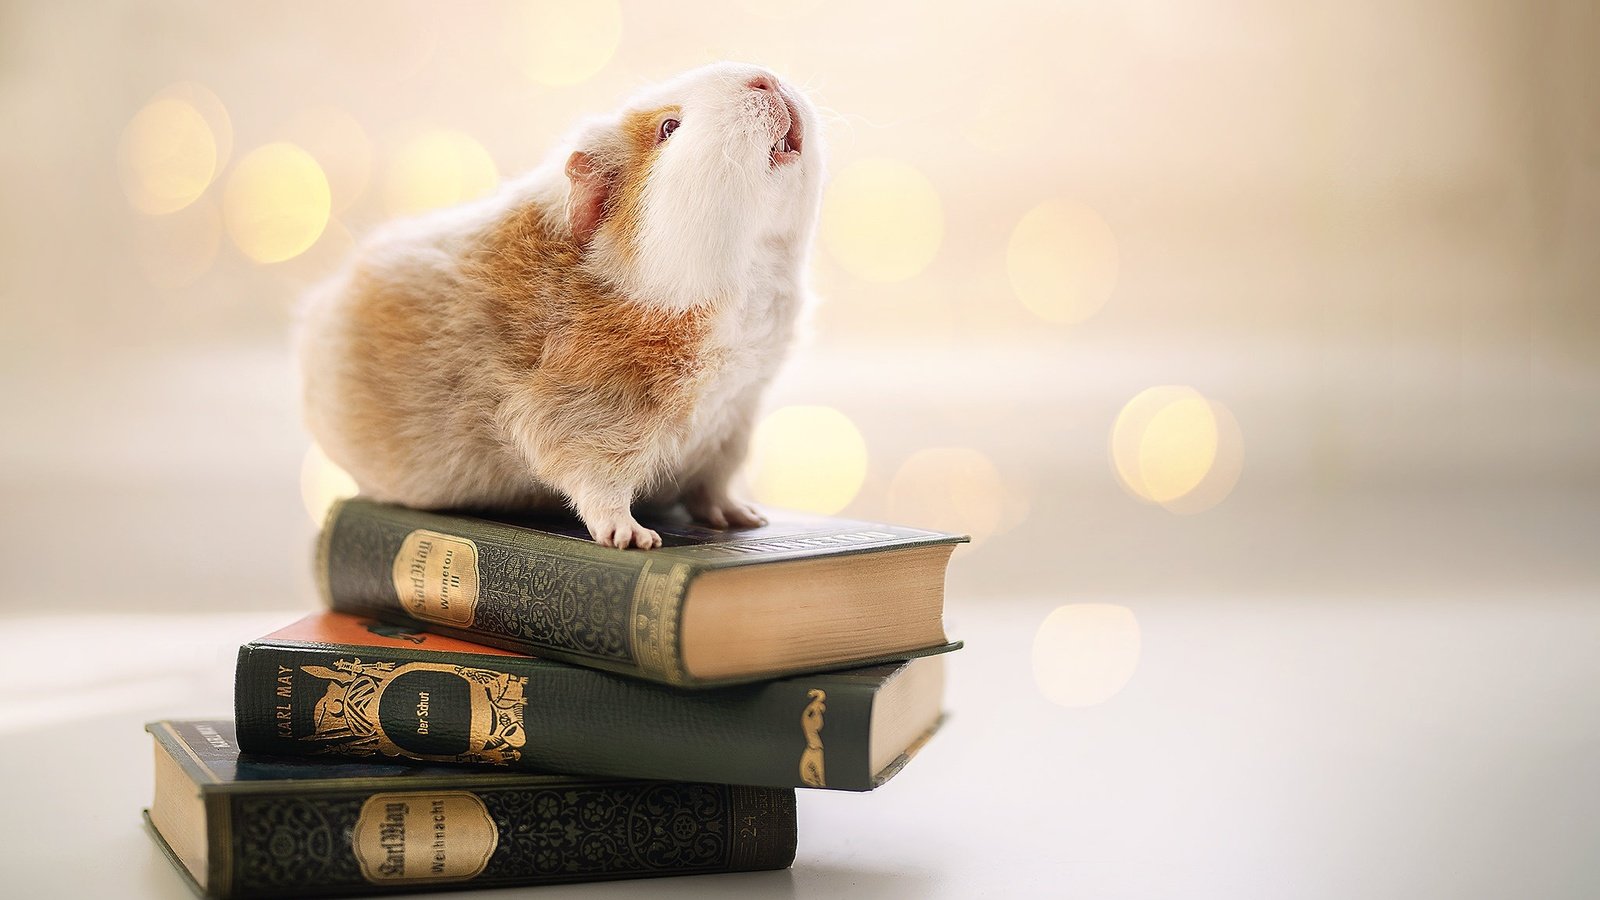 Обои фон, книги, грызун, морская свинка, background, books, rodent, guinea pig разрешение 2048x1365 Загрузить